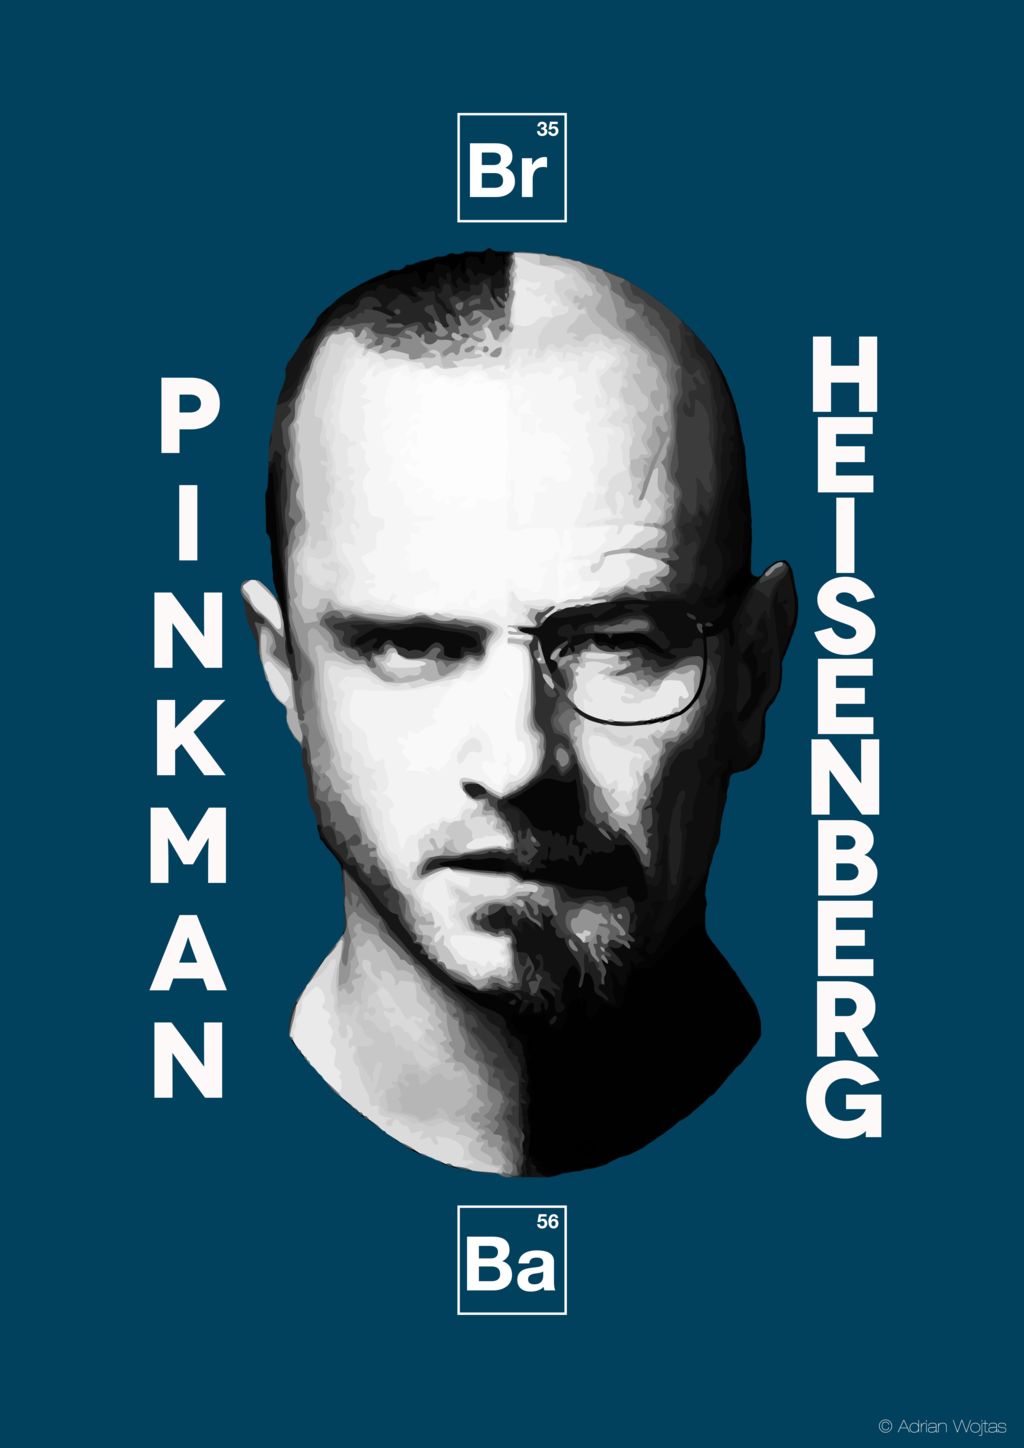 http://madex103.deviantart.com/art/Breaking-Bad-Heisenberg-and-Pinkman-390980664